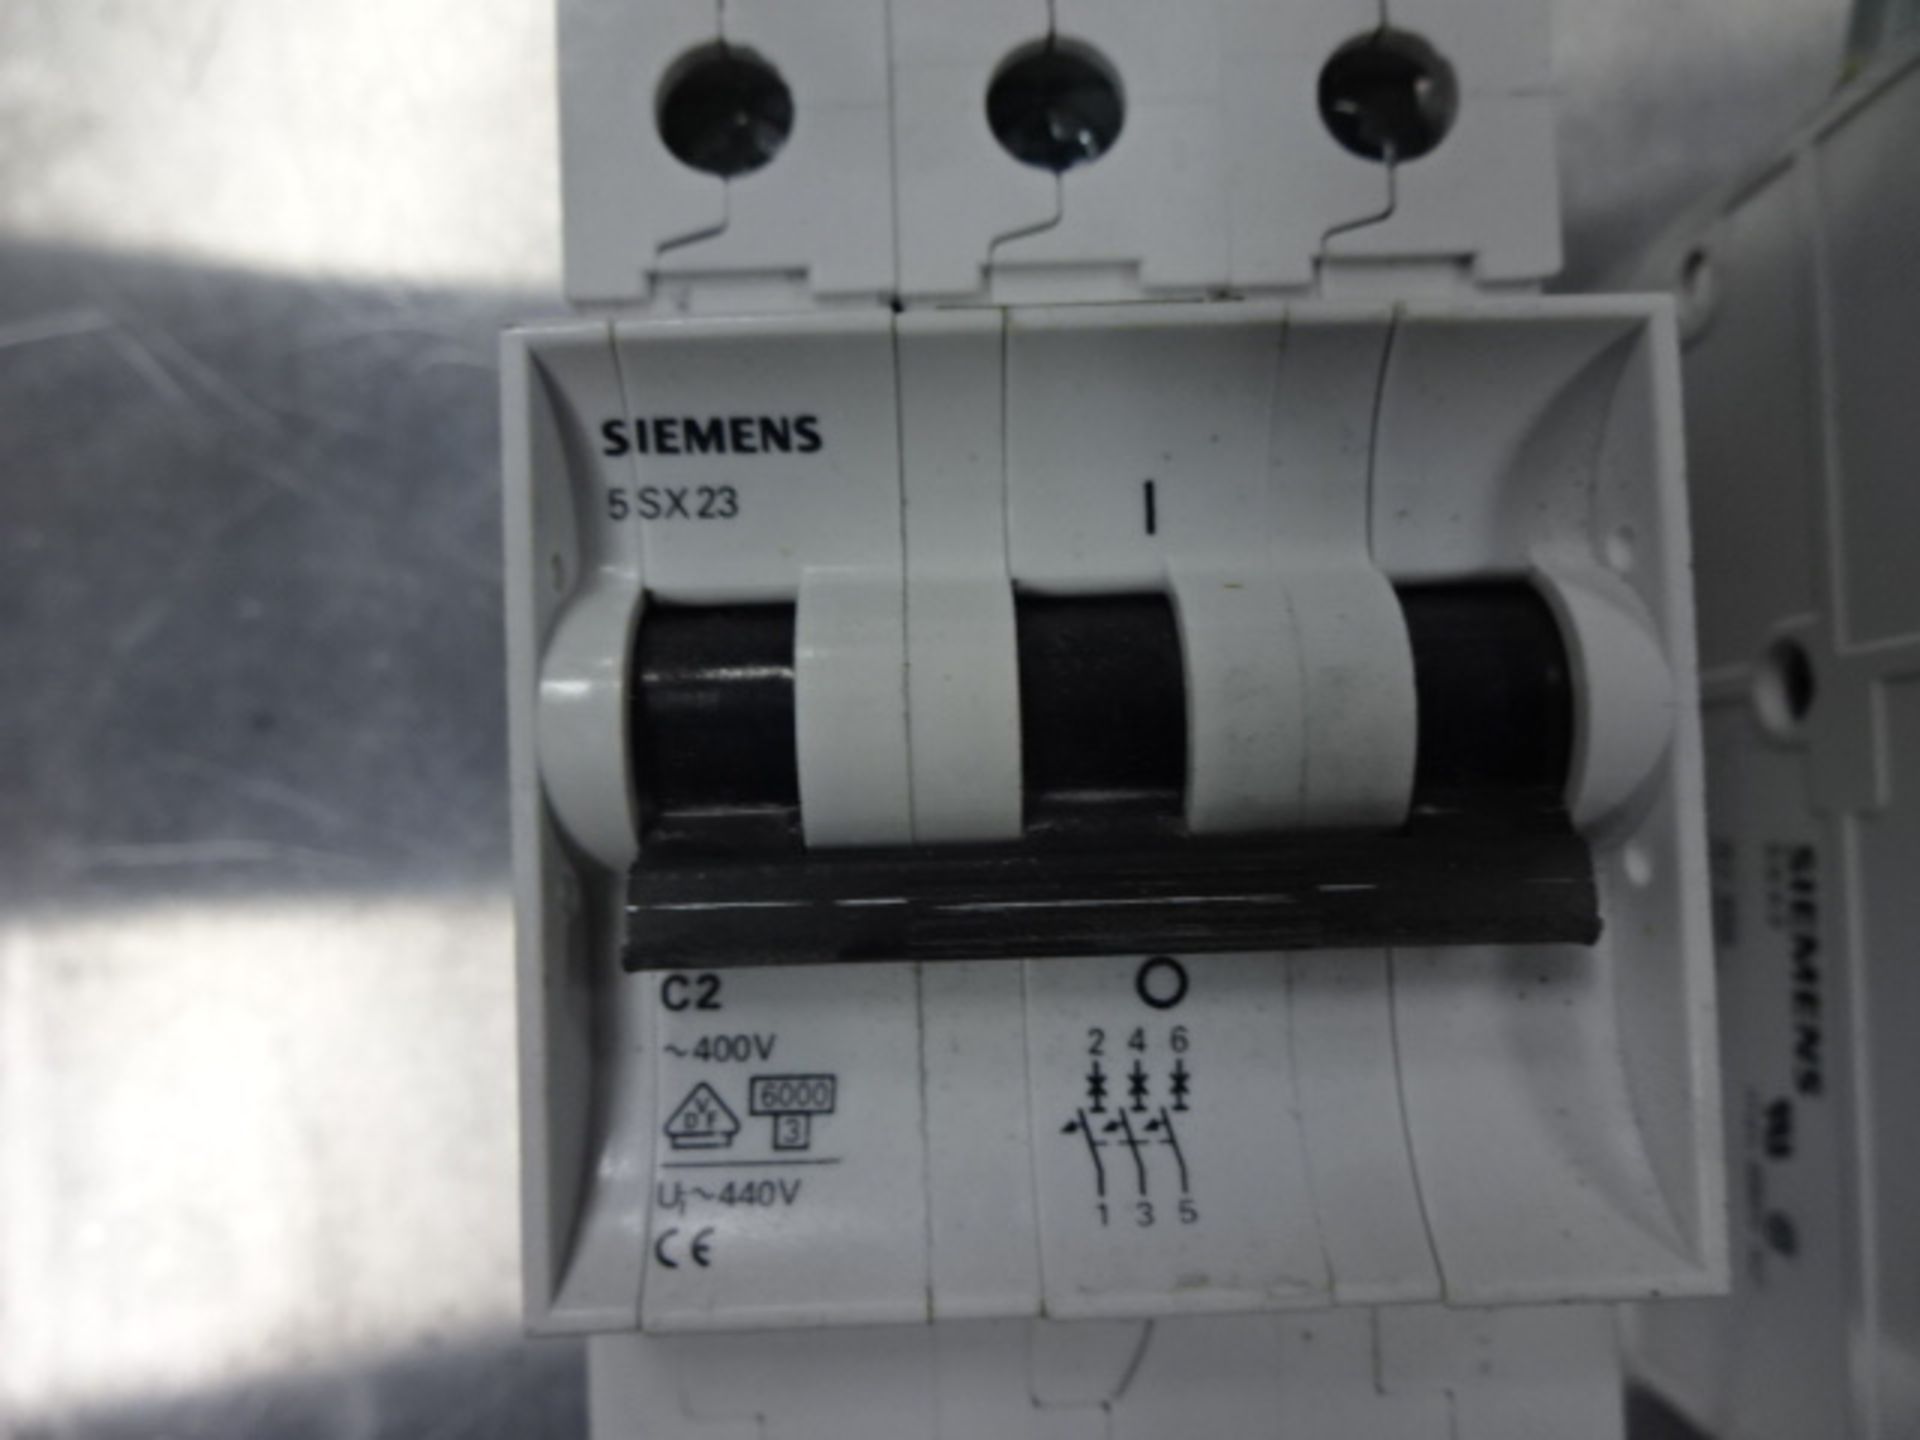 Lot of Siemens 5-SX-23 - Image 2 of 2